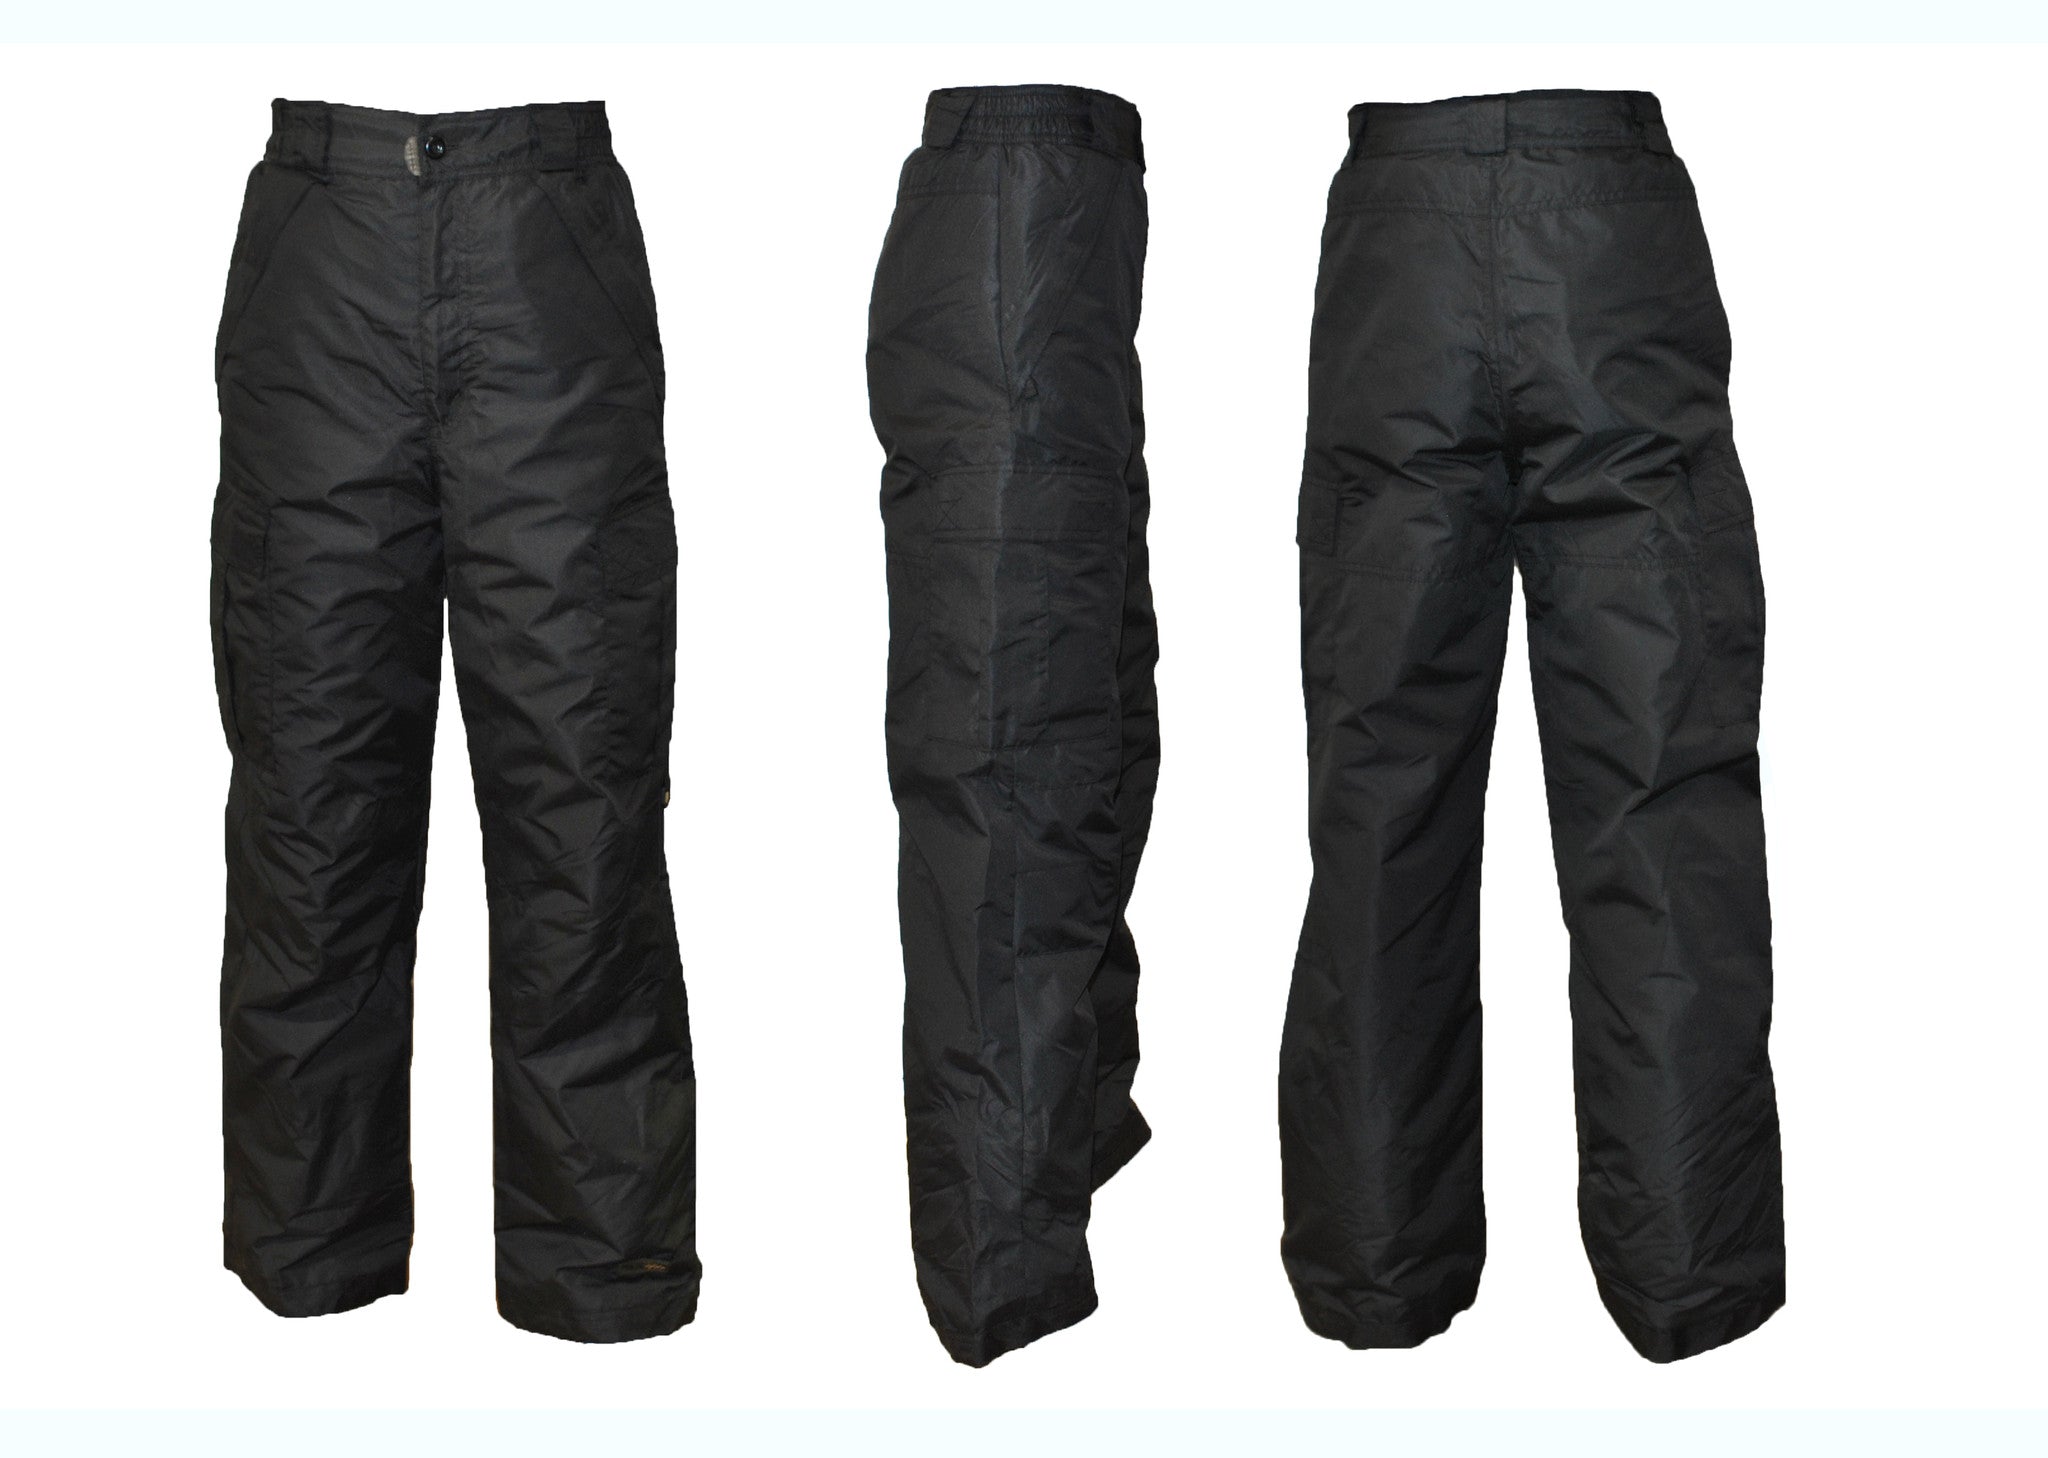 Winter Ski & Board Pants-Adult Pulse Cargo Pants, Black, XS-4XL